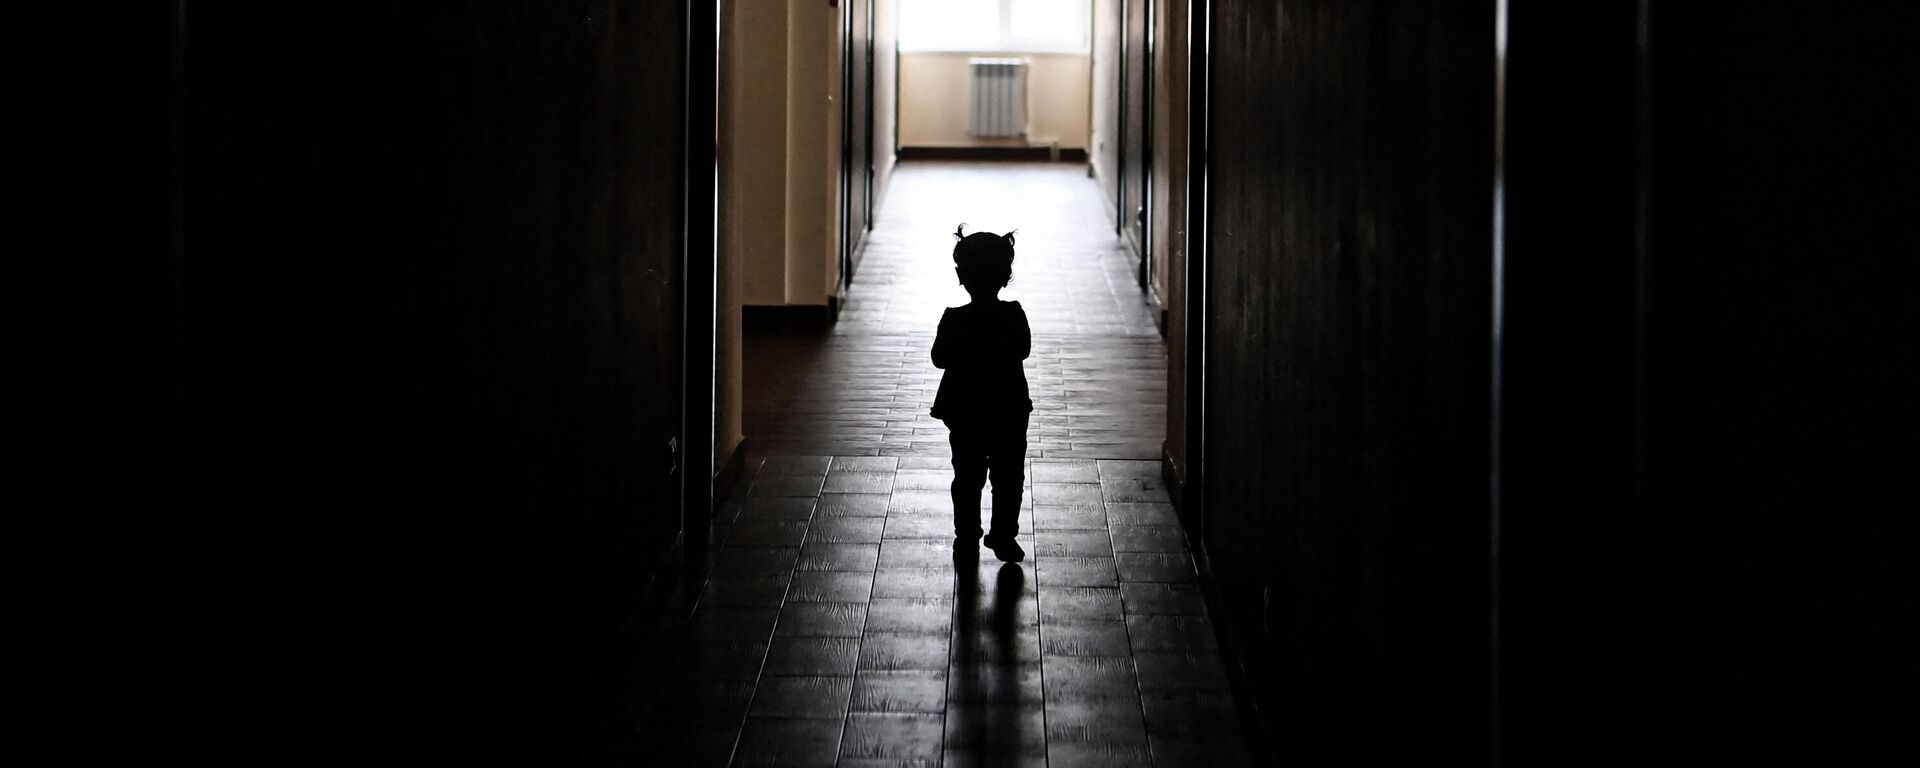 Ребенок идет по коридору, иллюстративное фото - Sputnik Узбекистан, 1920, 26.03.2021